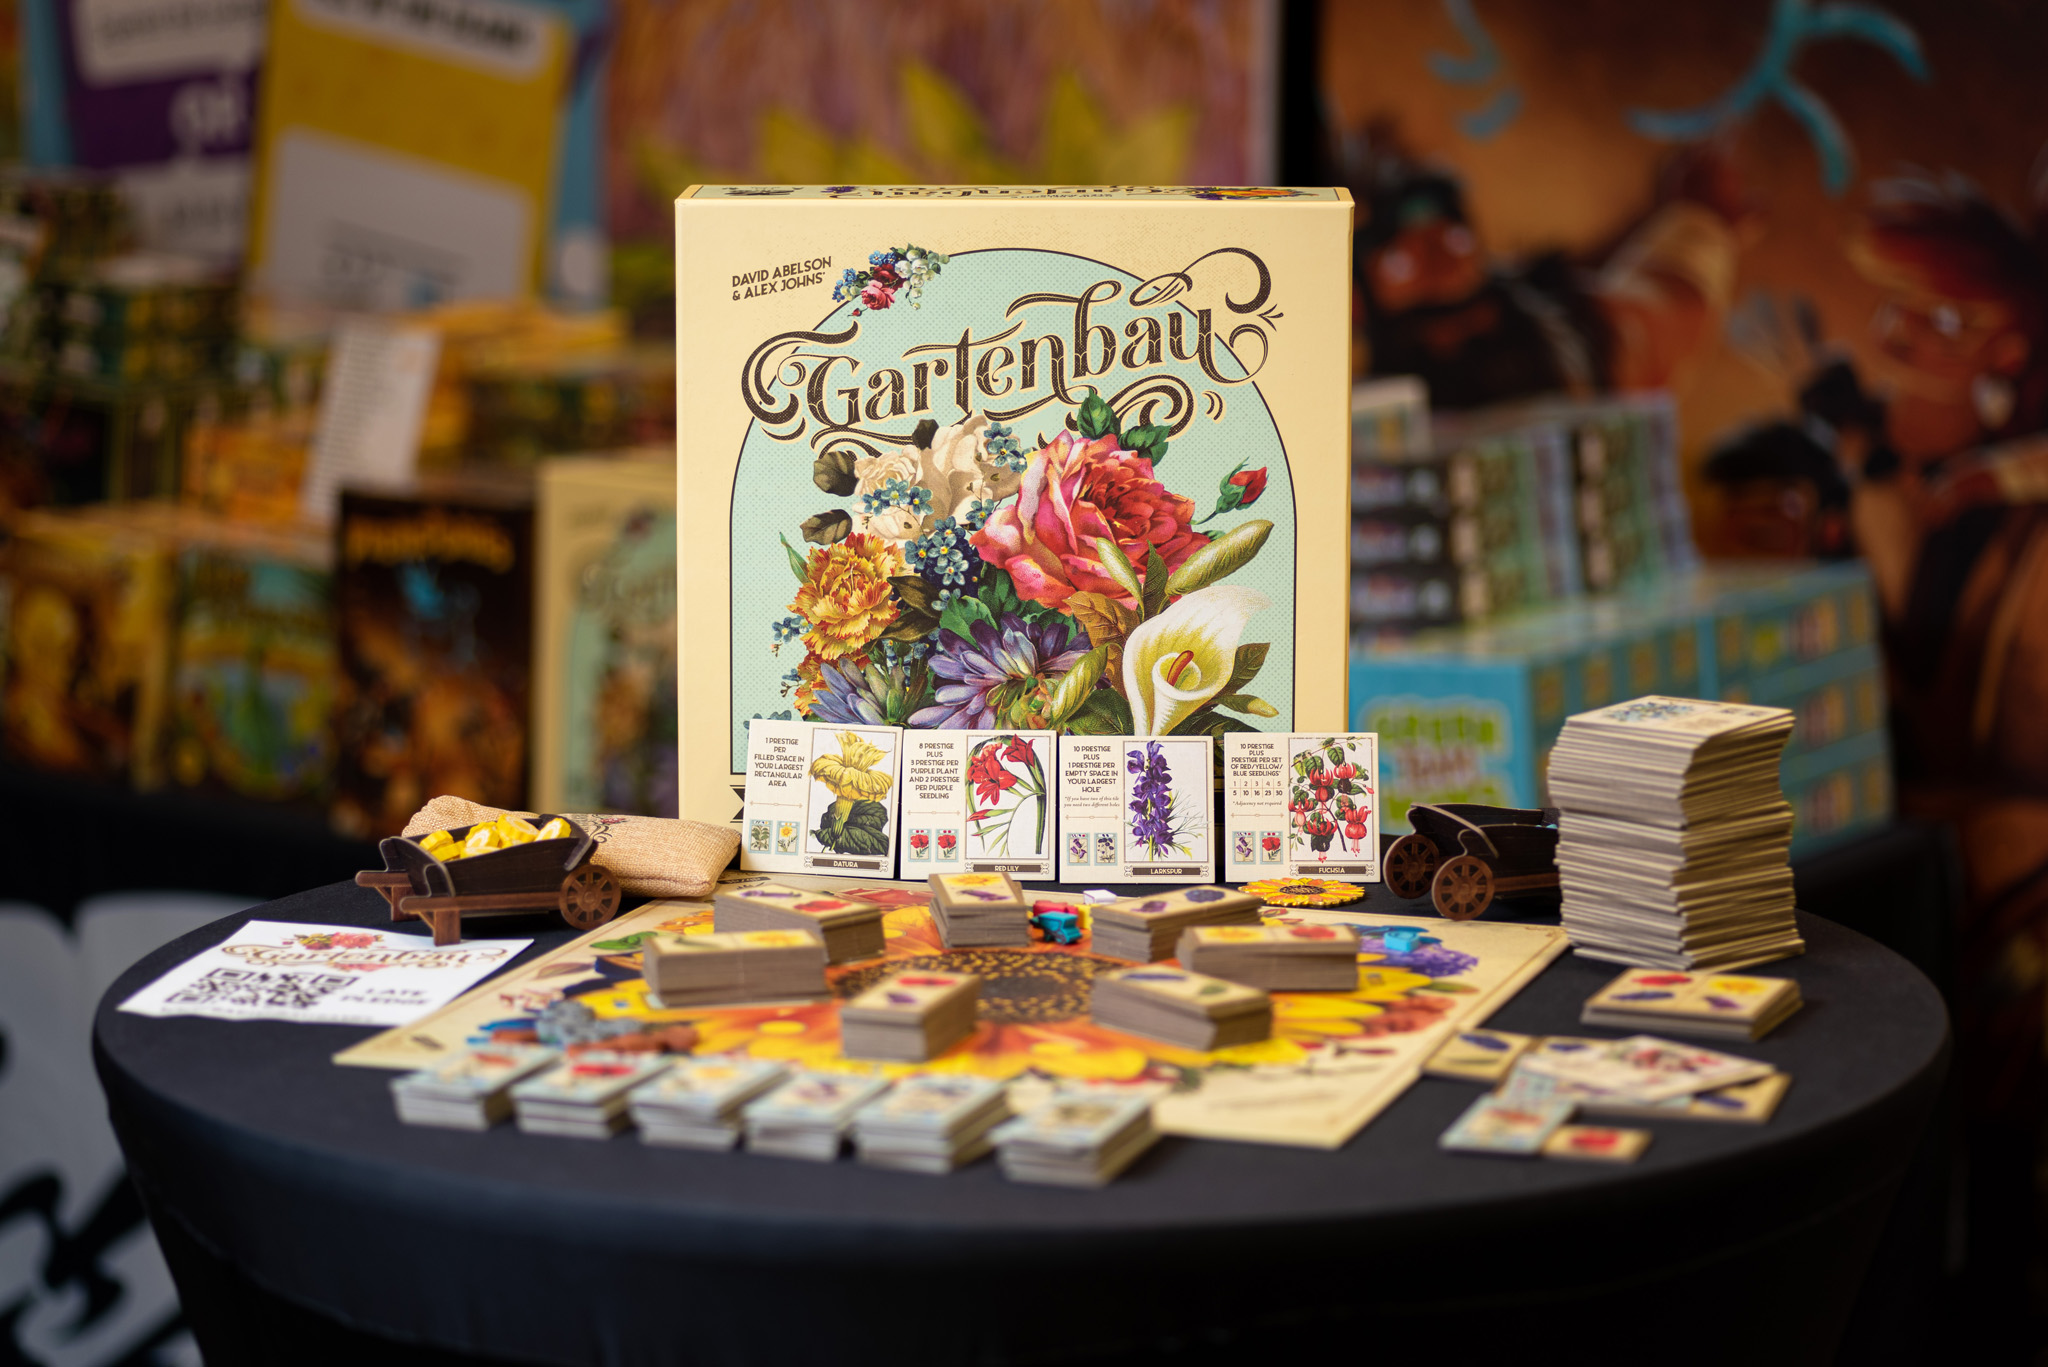 Gartenbau board game